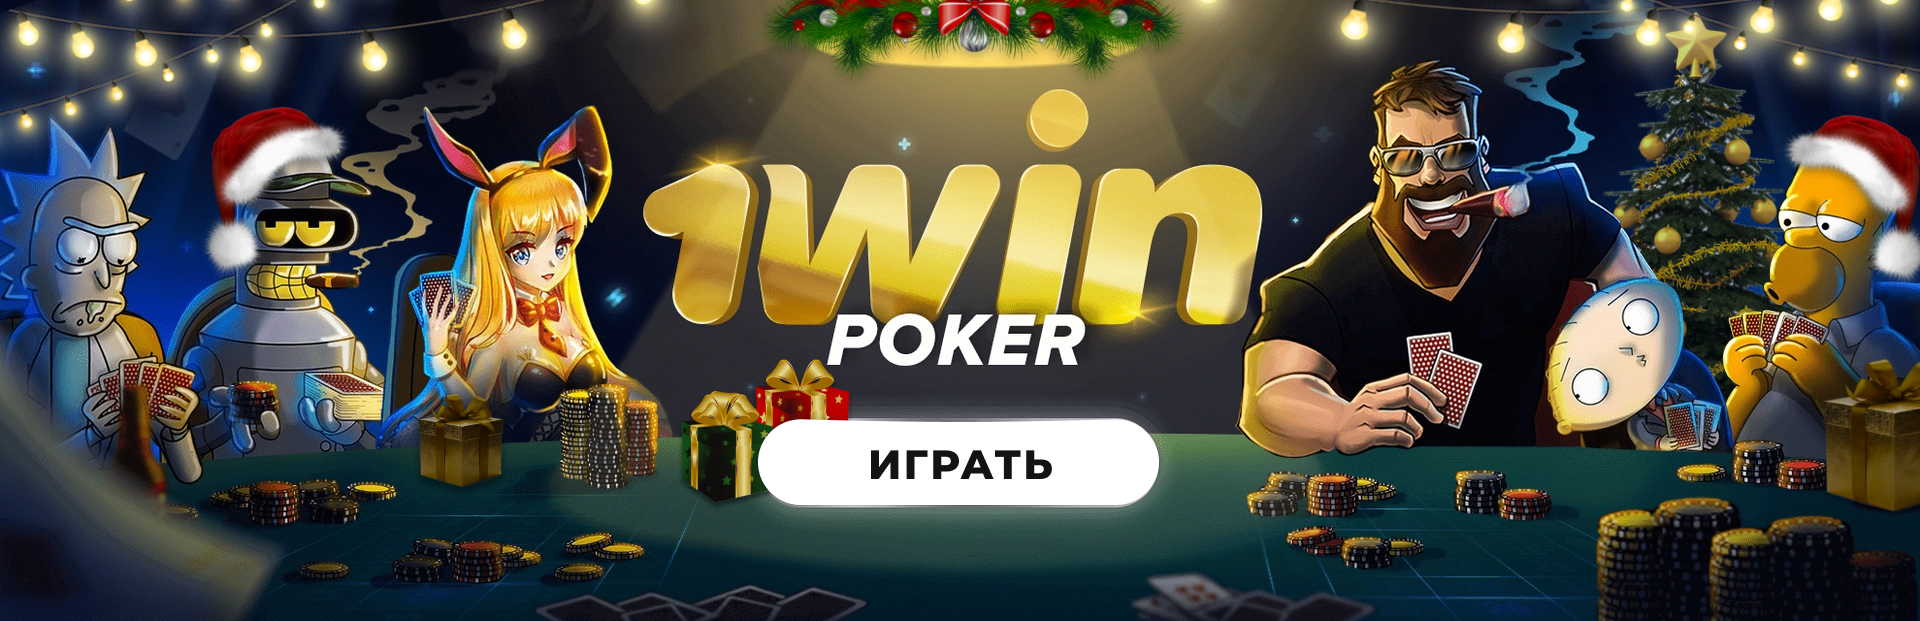 1win покер бонус